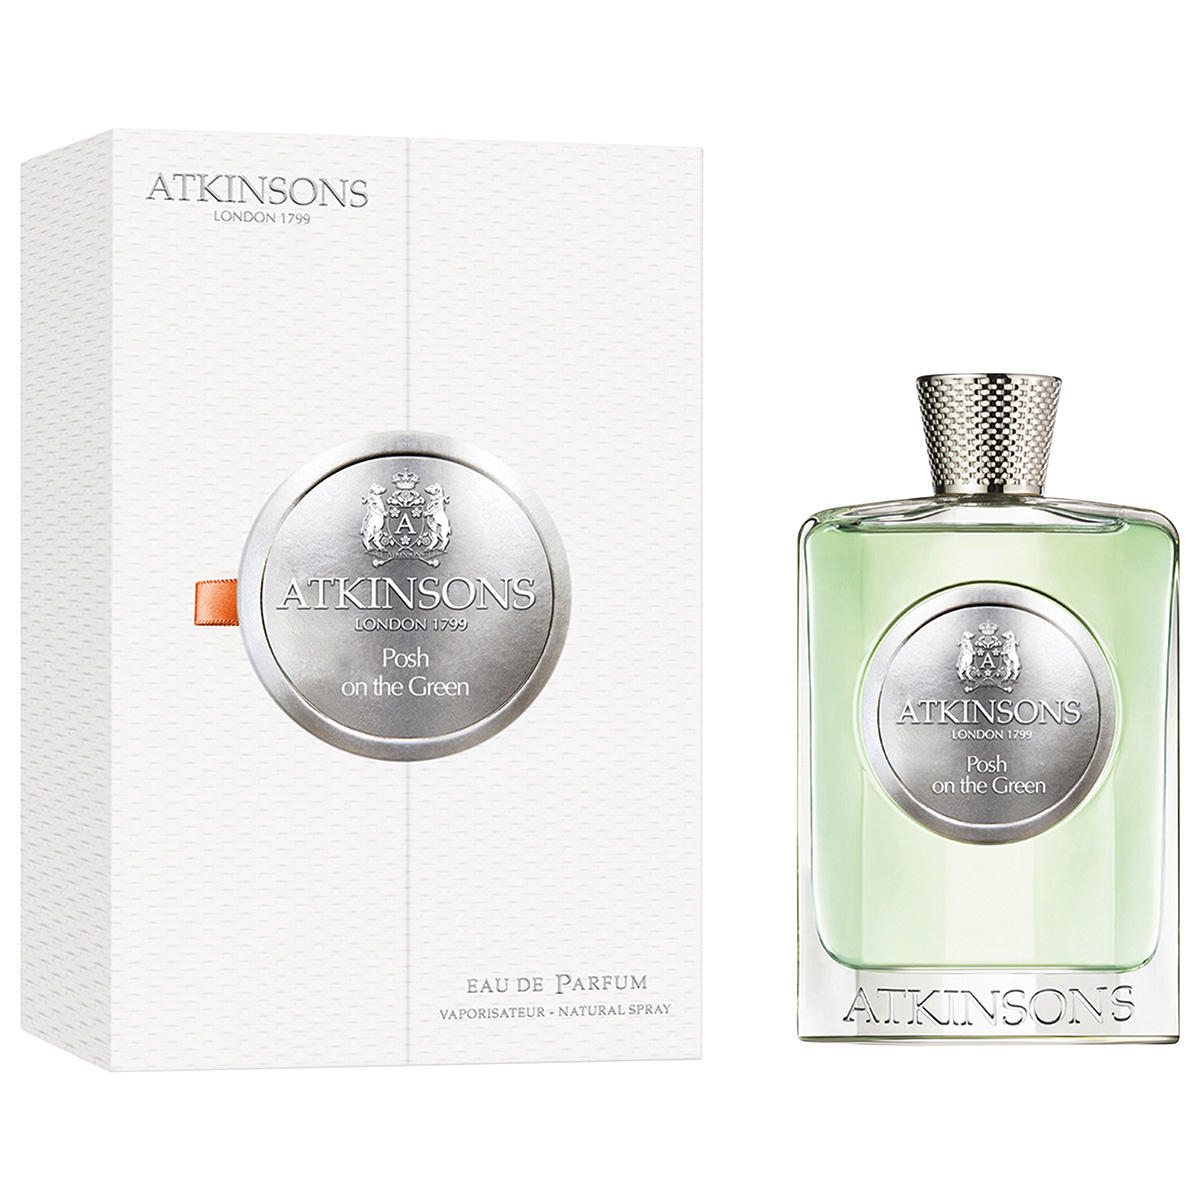 ATKINSONS Posh on the Green Eau de Parfum 100 ml - 2